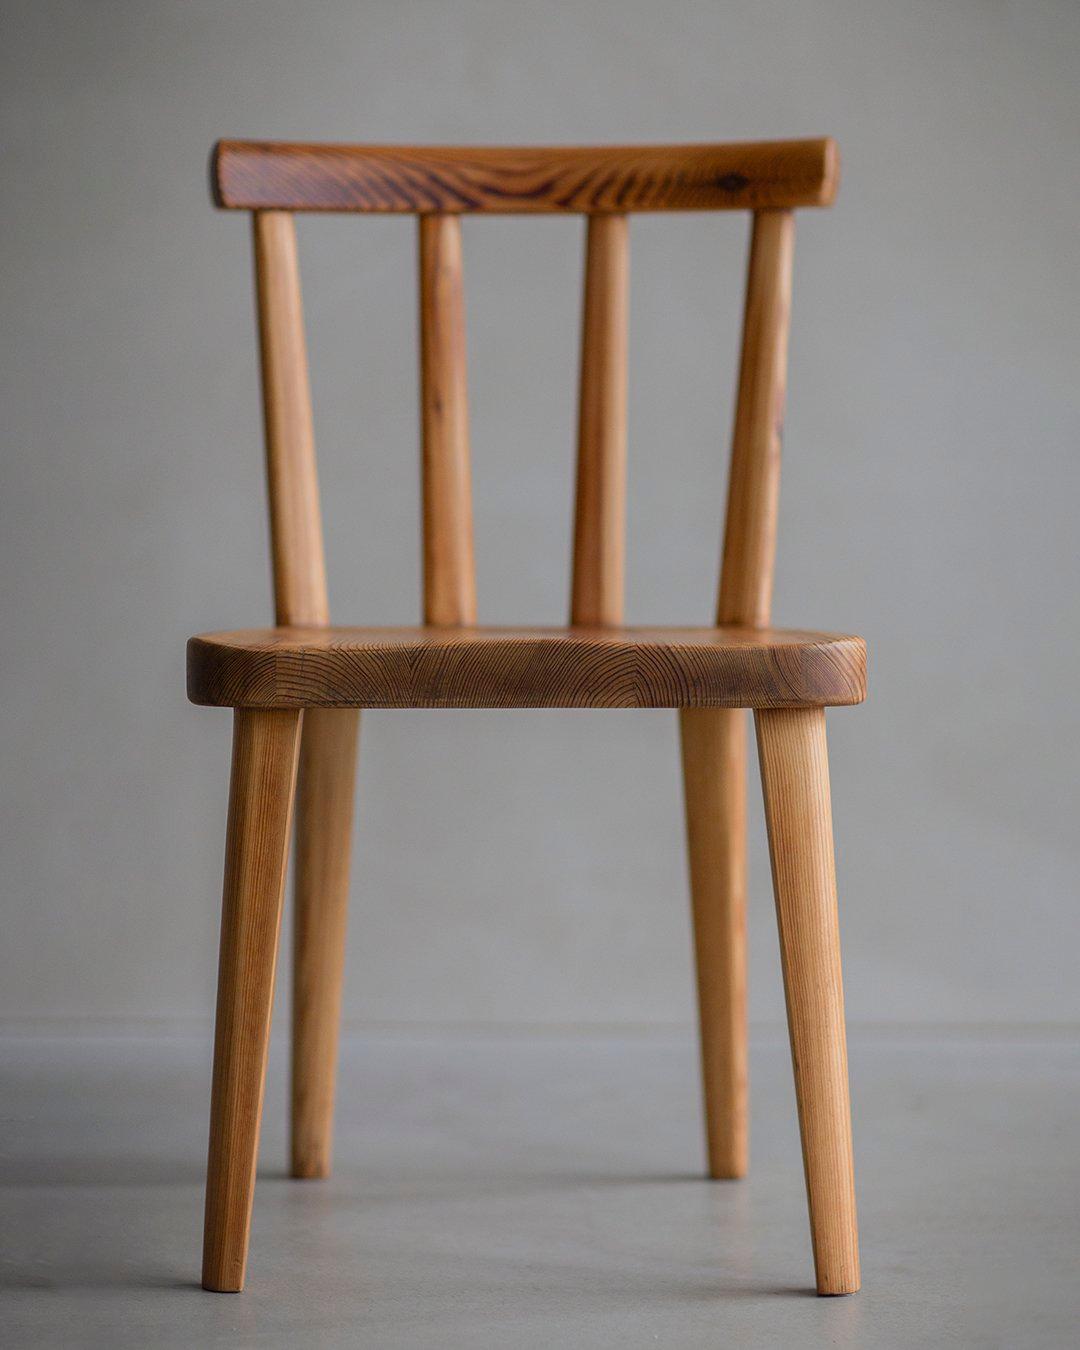 Milieu du XXe siècle Axel Einar Hjorth - Utö Dining Chair - produit par Nordiska Kompaniet en Suède en vente